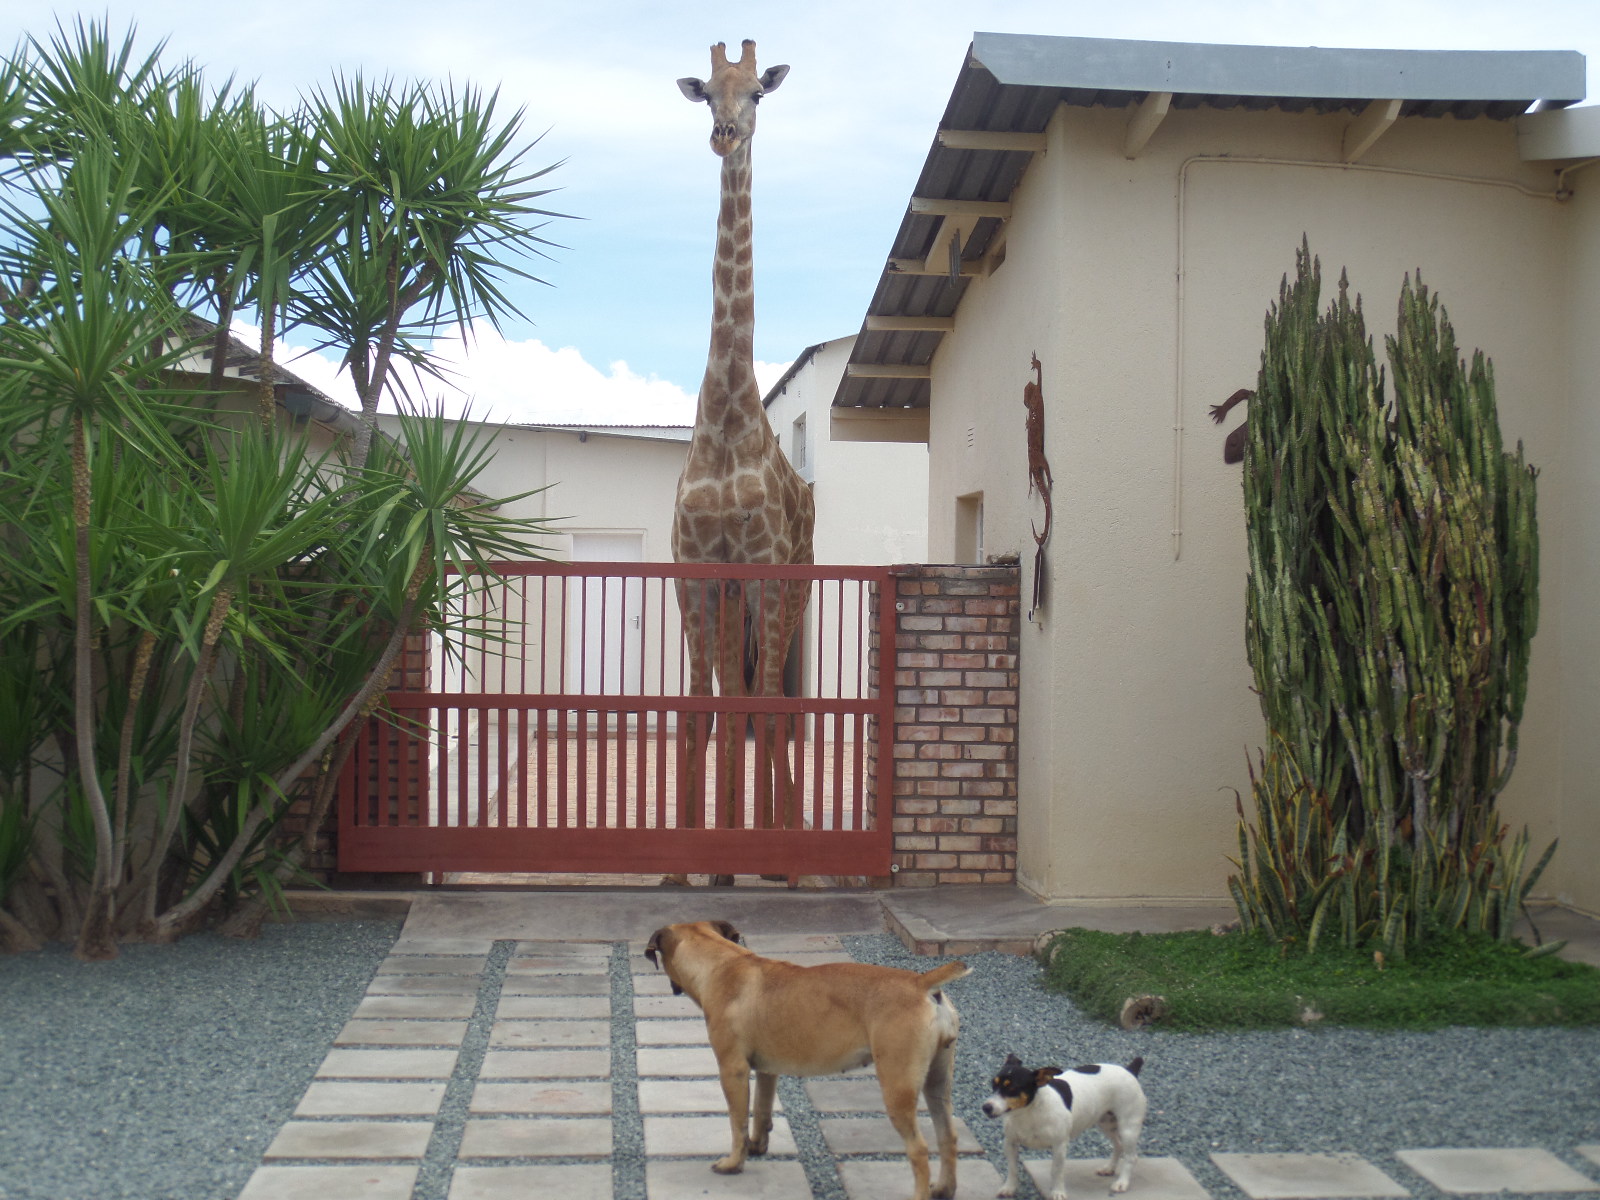 Namibia giraffe & dogs.JPG